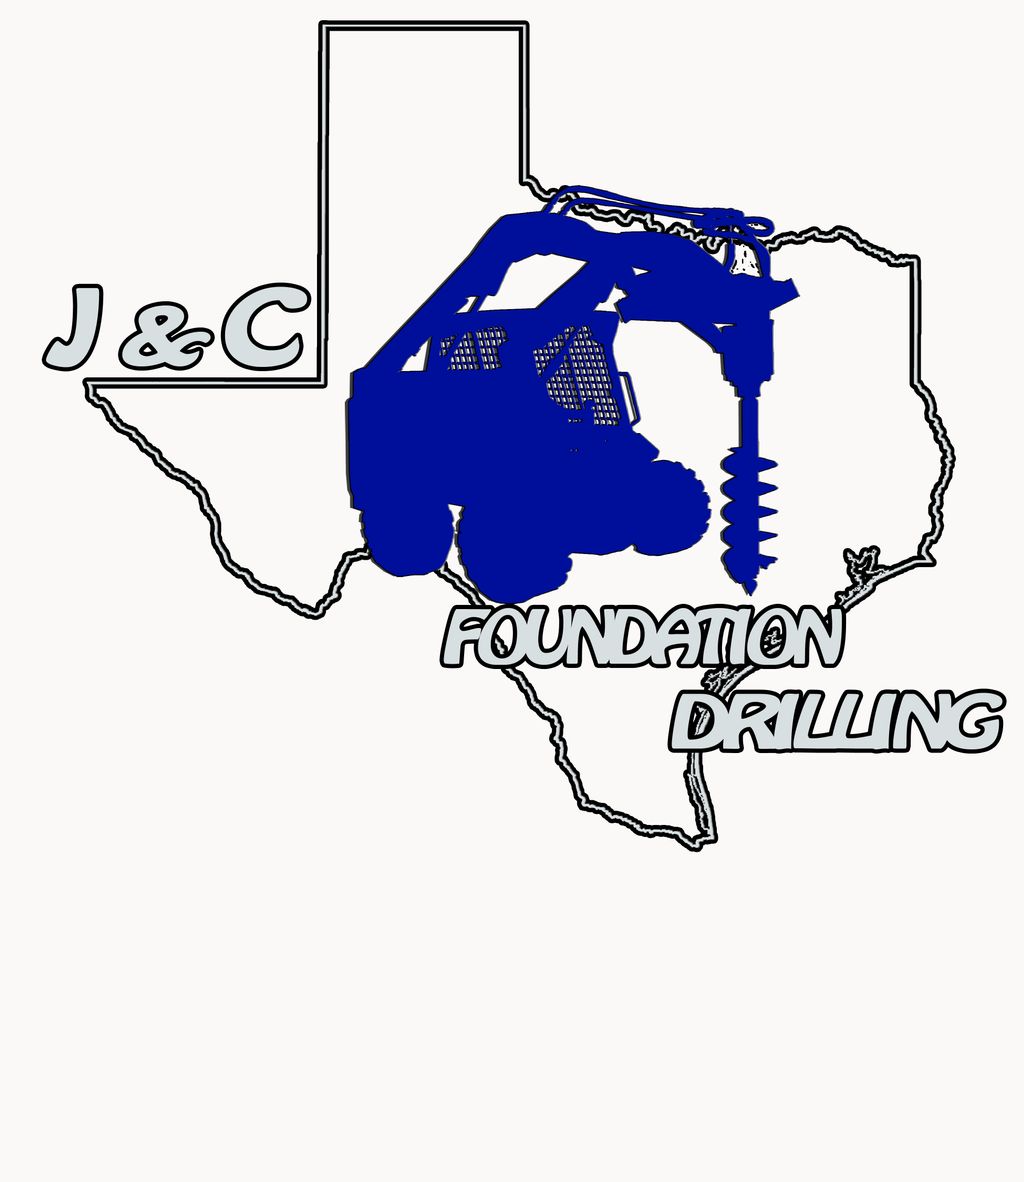 J&C Foundation Drilling